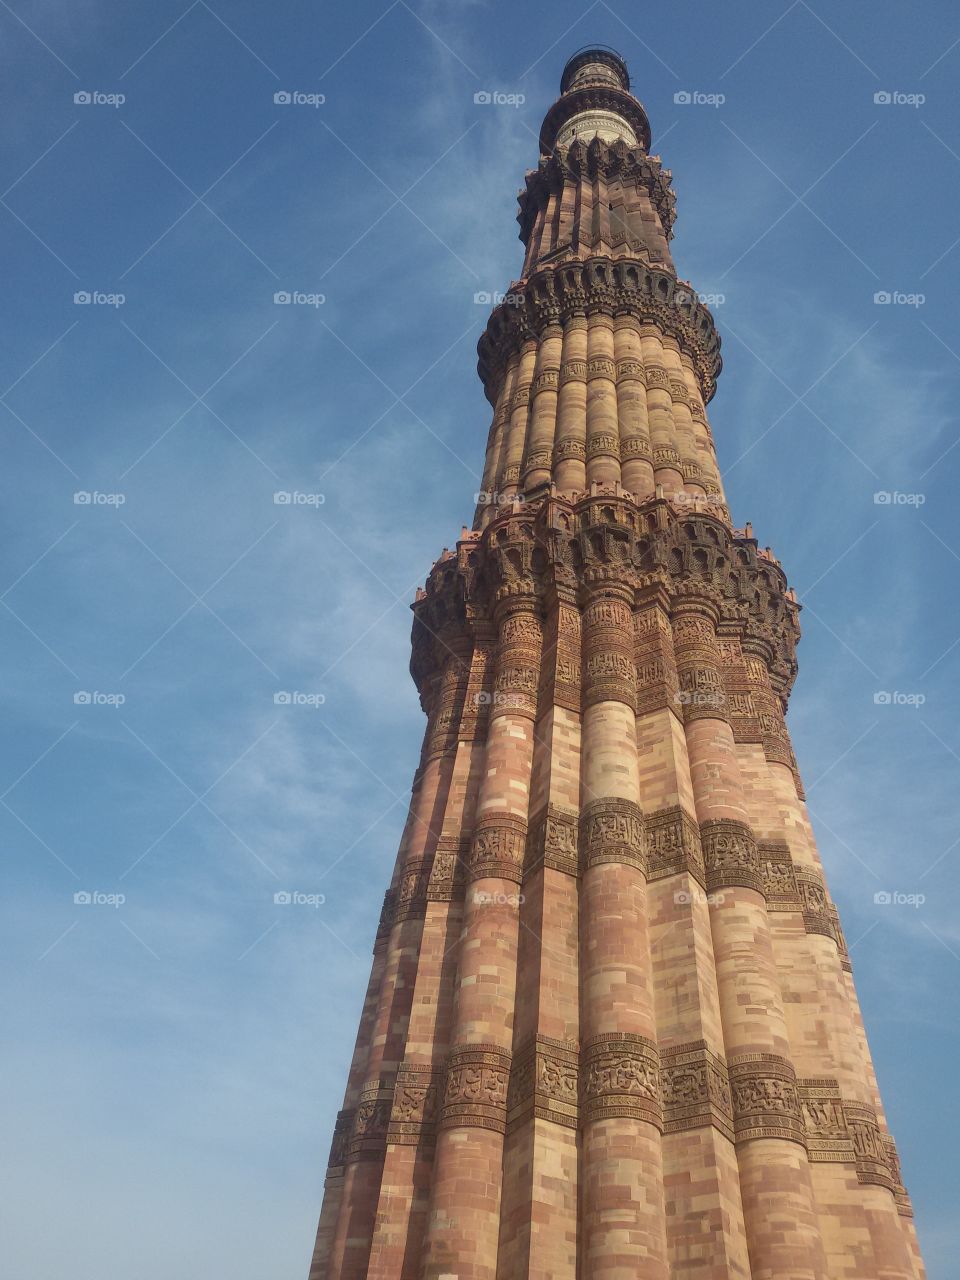 Qutub Minar is a minaret that forms part of the Qutb complex, a UNESCO World Heritage Site in the Mehrauli area of Delhi, India